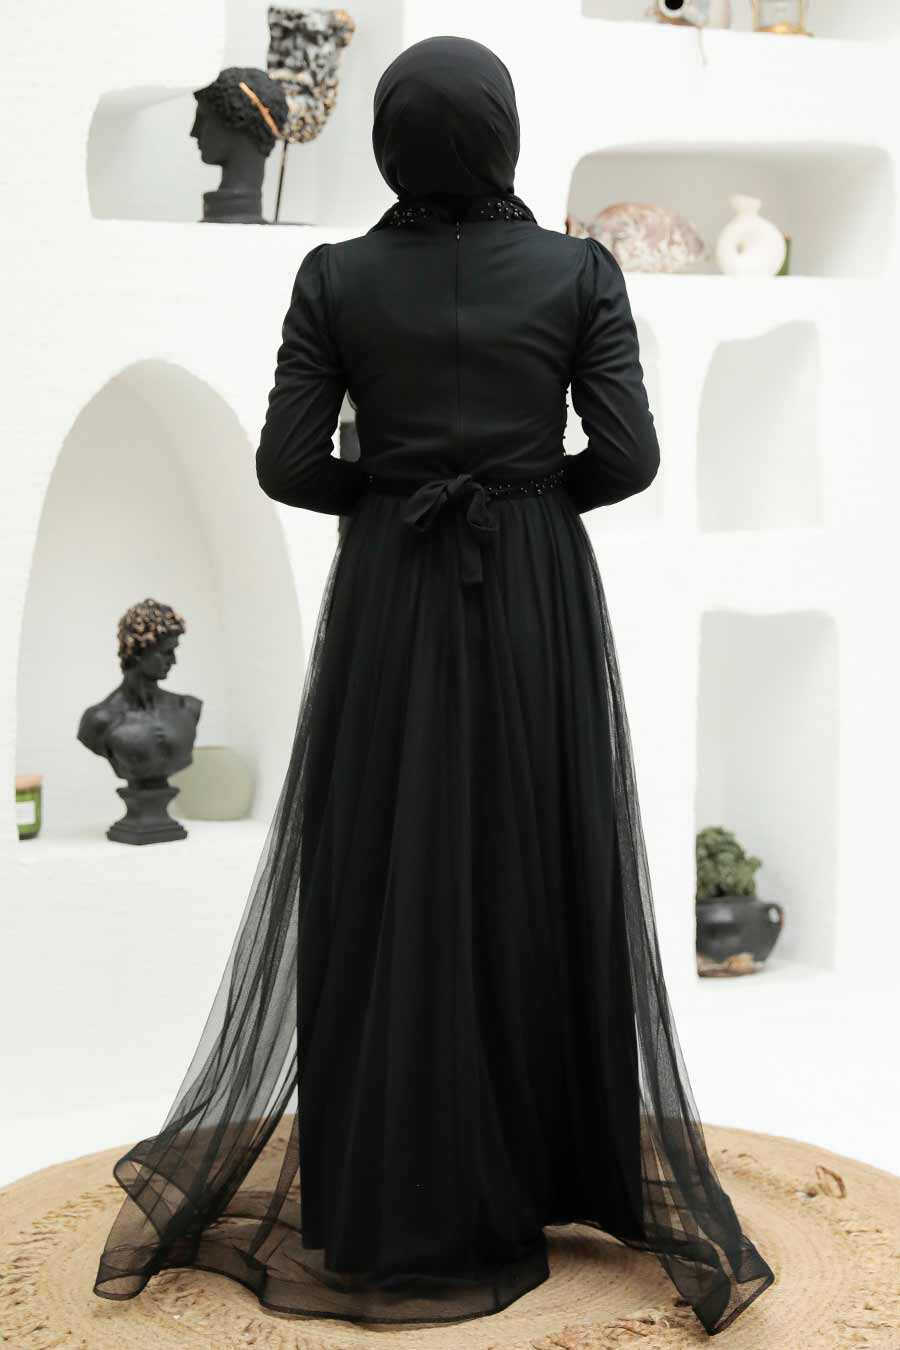 Neva Style - Plus Size Black Muslim Dress 56641S